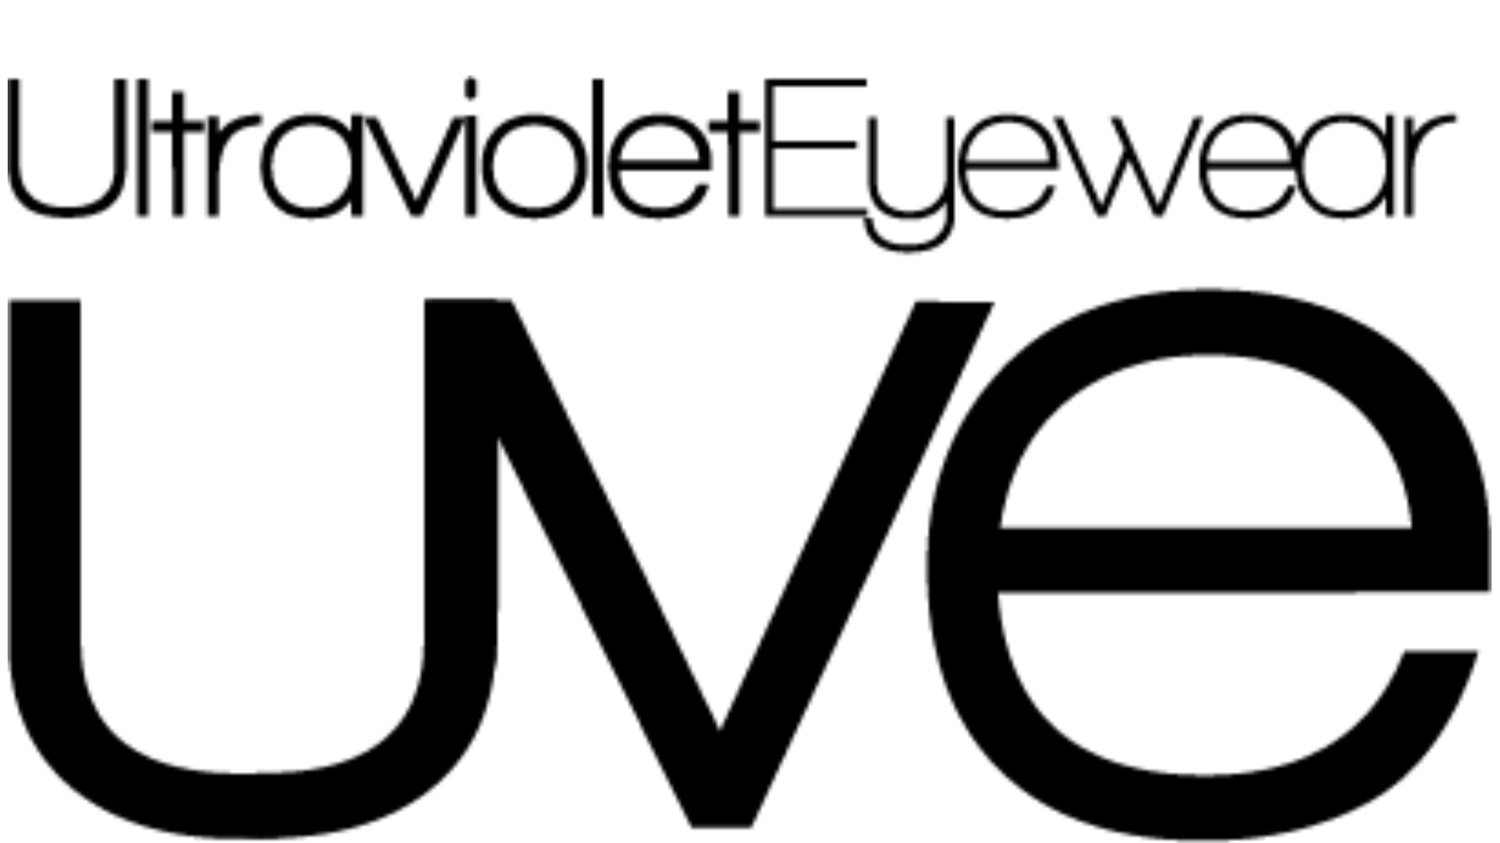 Ultraviolet Eyewear